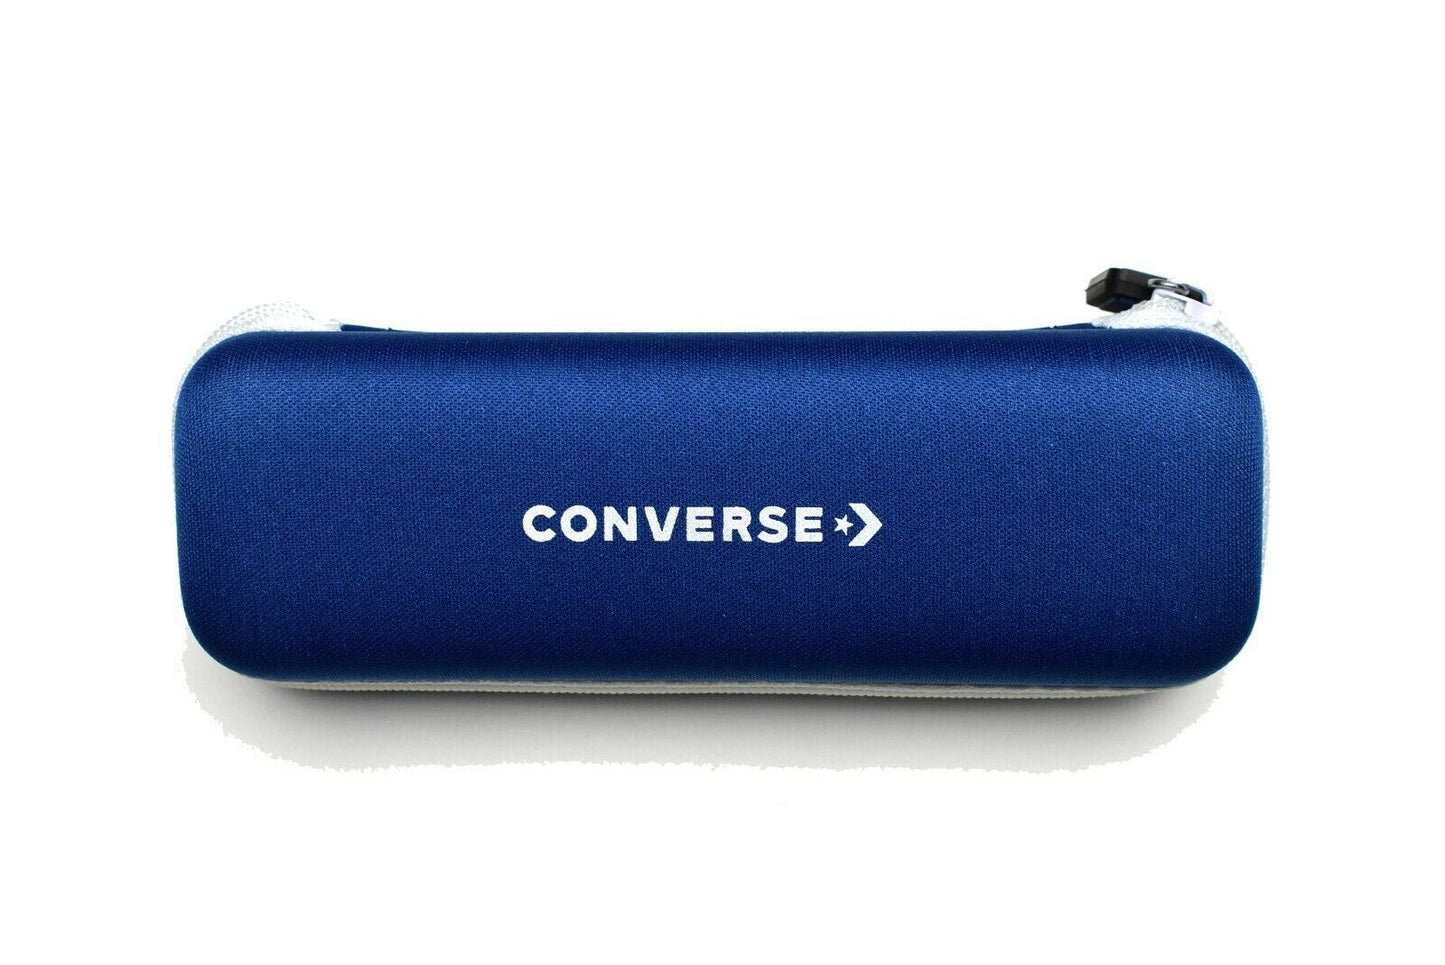 Converse CV5001-411-5316 51mm New Eyeglasses